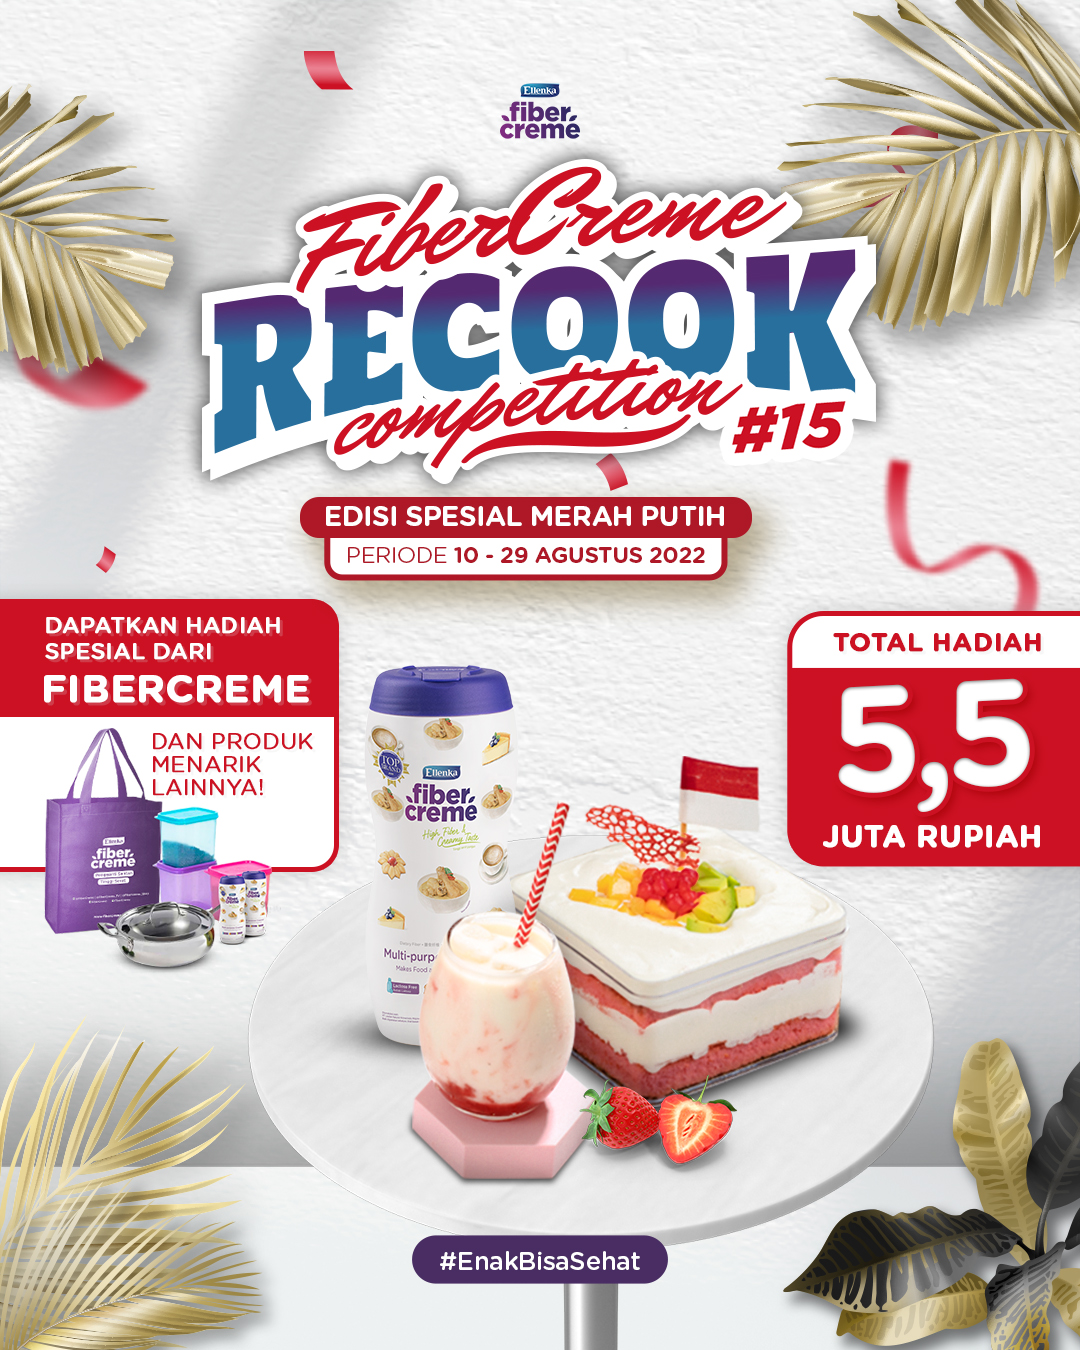 FiberCreme Recook Competition 14